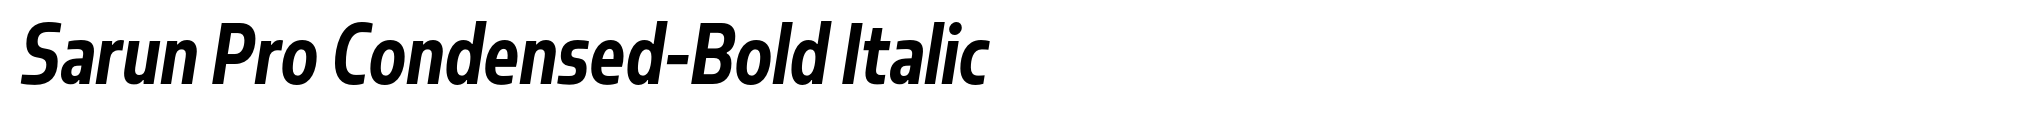 Sarun Pro Condensed-Bold Italic image